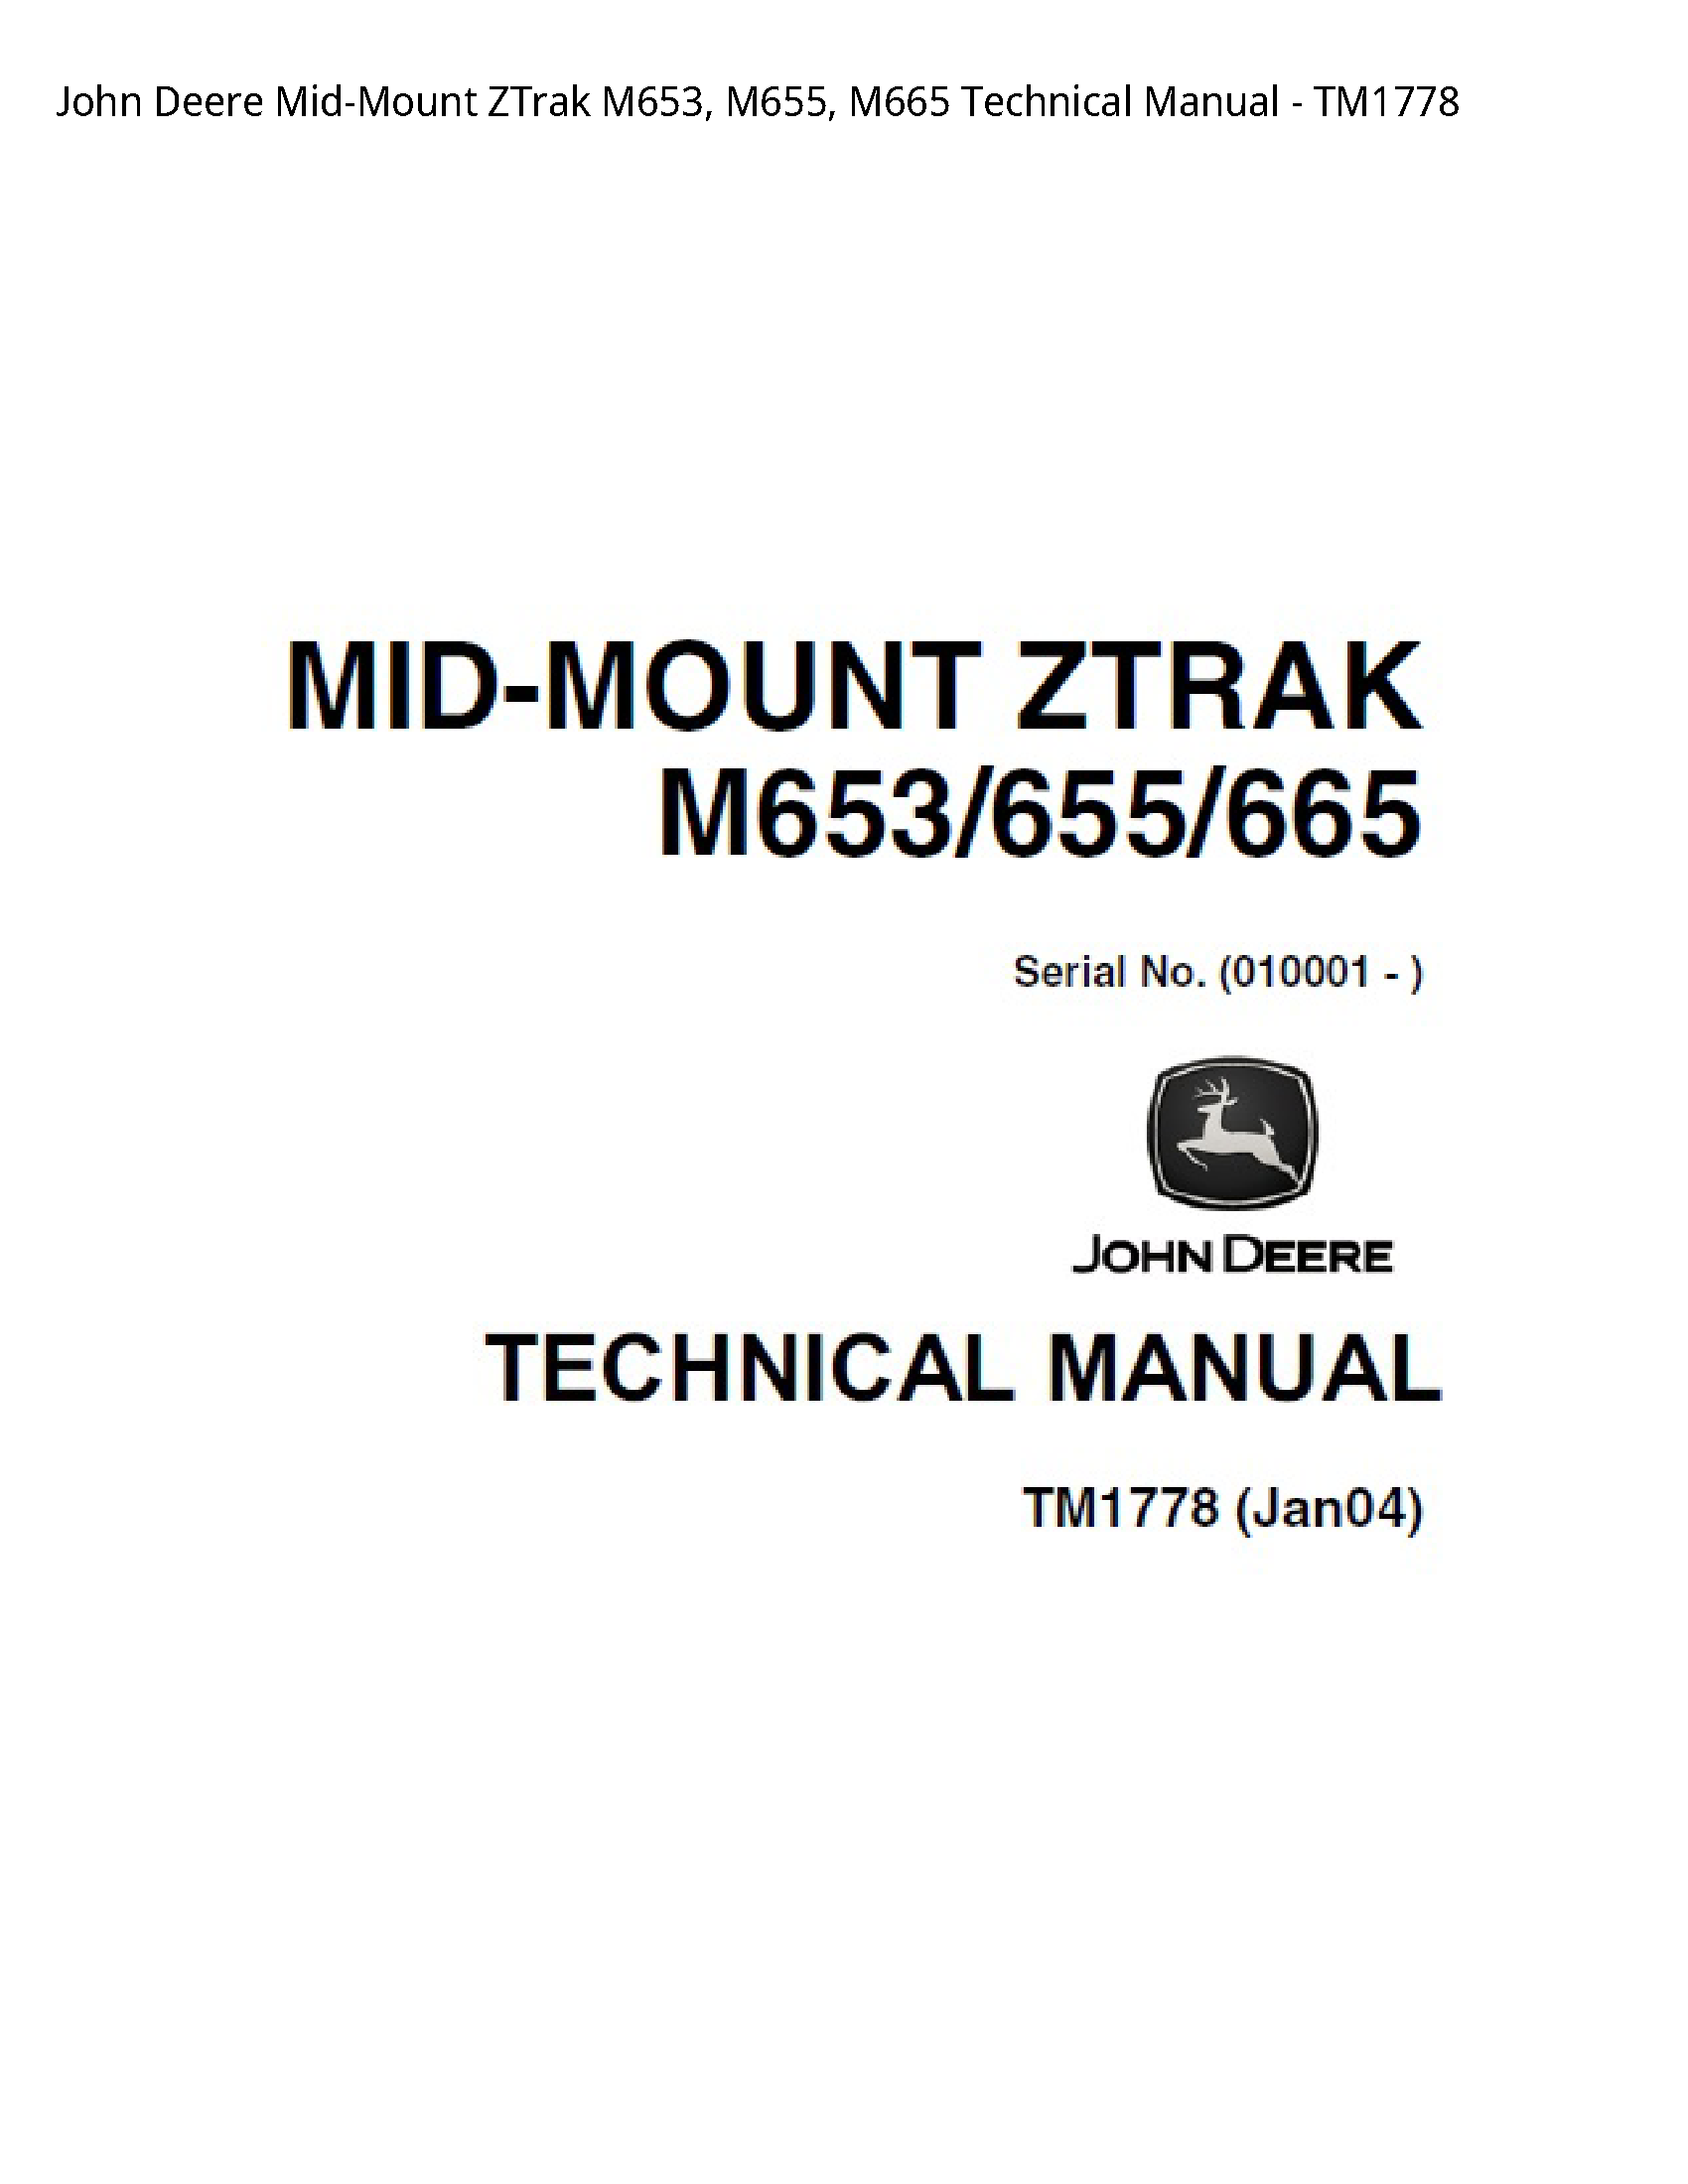 John Deere M653 Mid-Mount ZTrak Technical manual